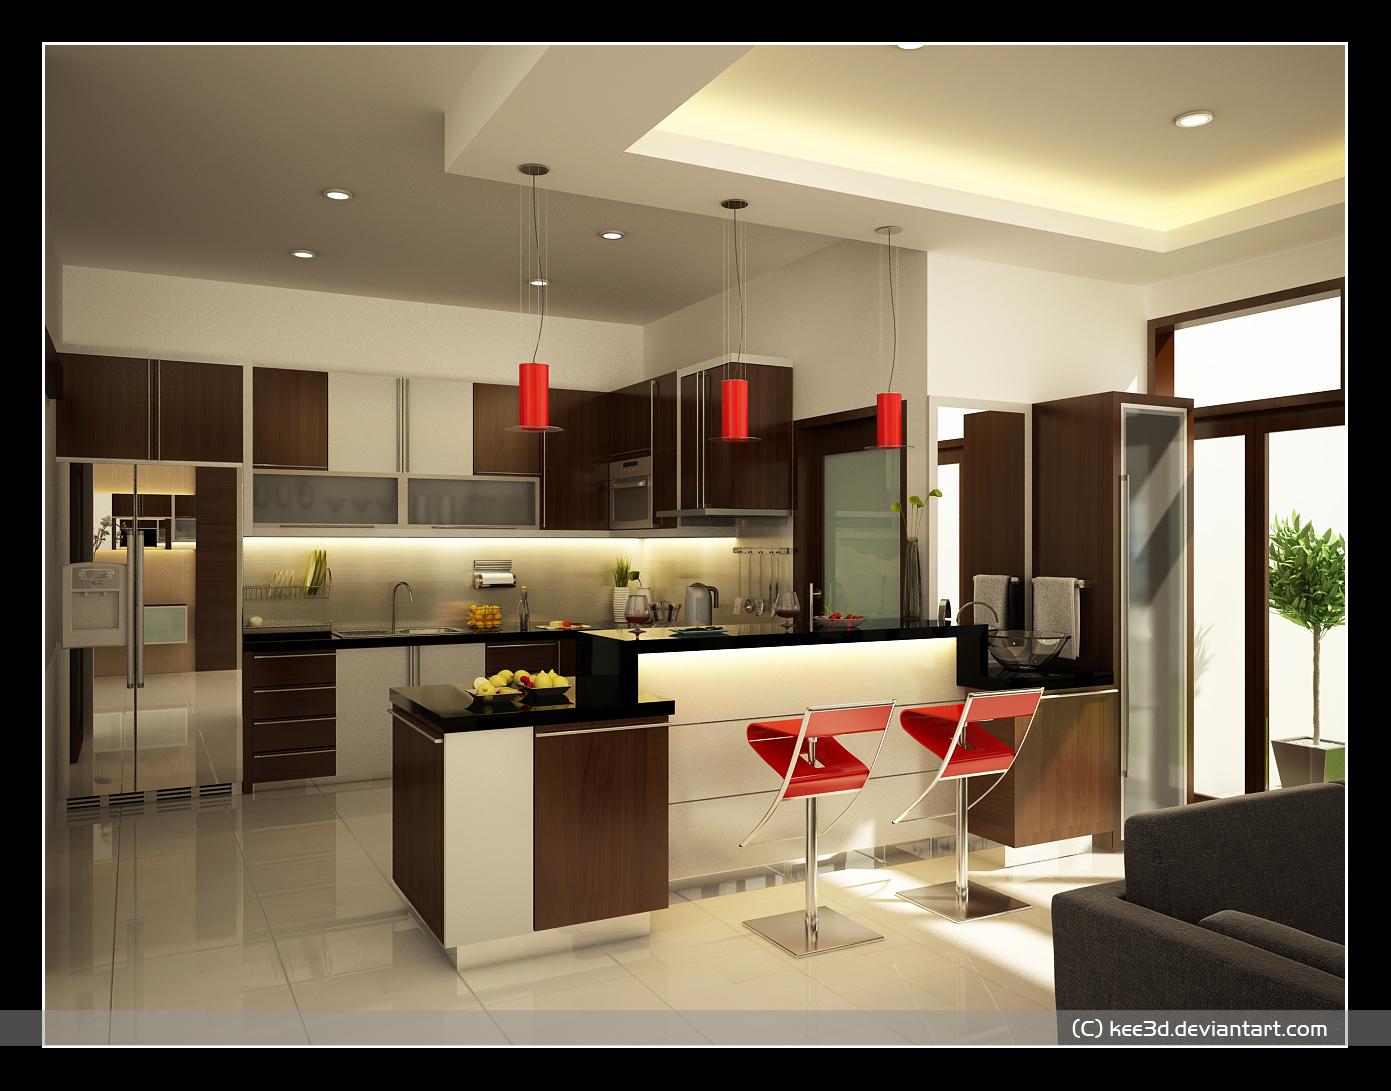 kitchen design ideas layout photo - 4